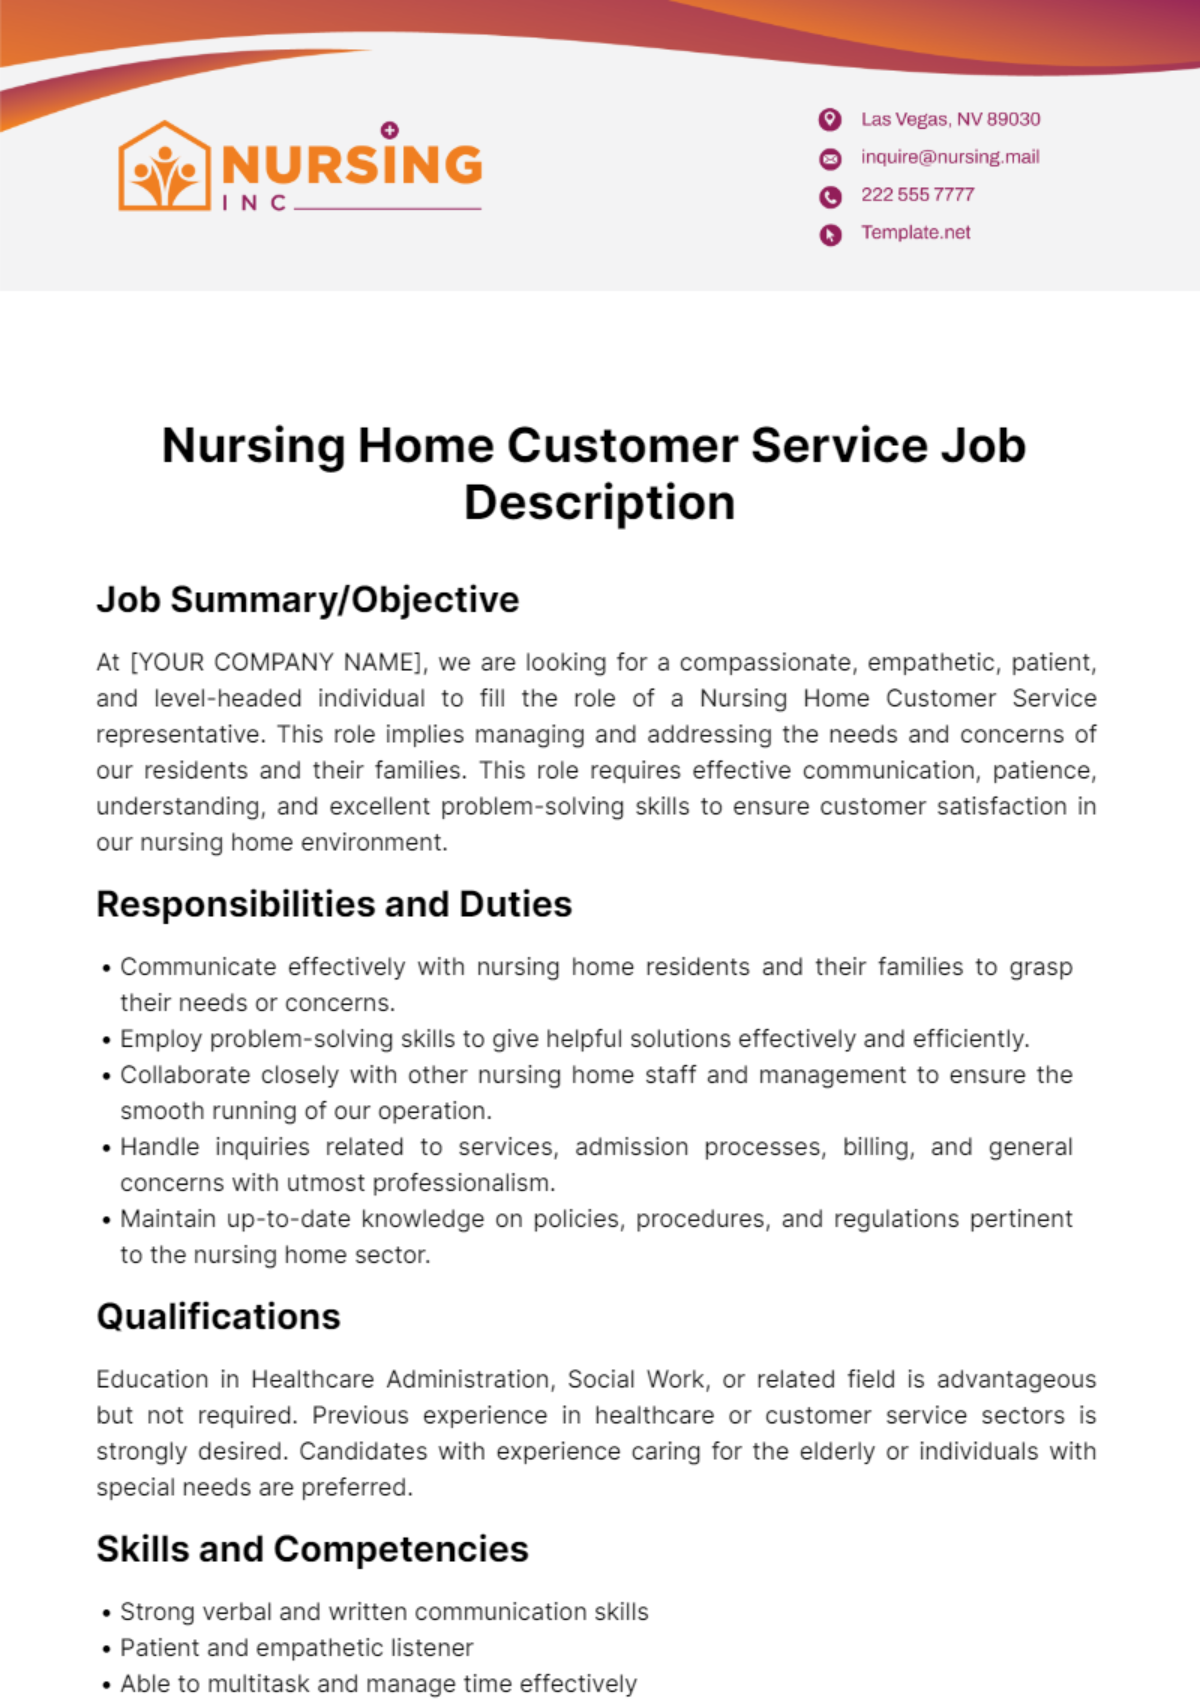 Nursing Home Customer Service Job Description Template